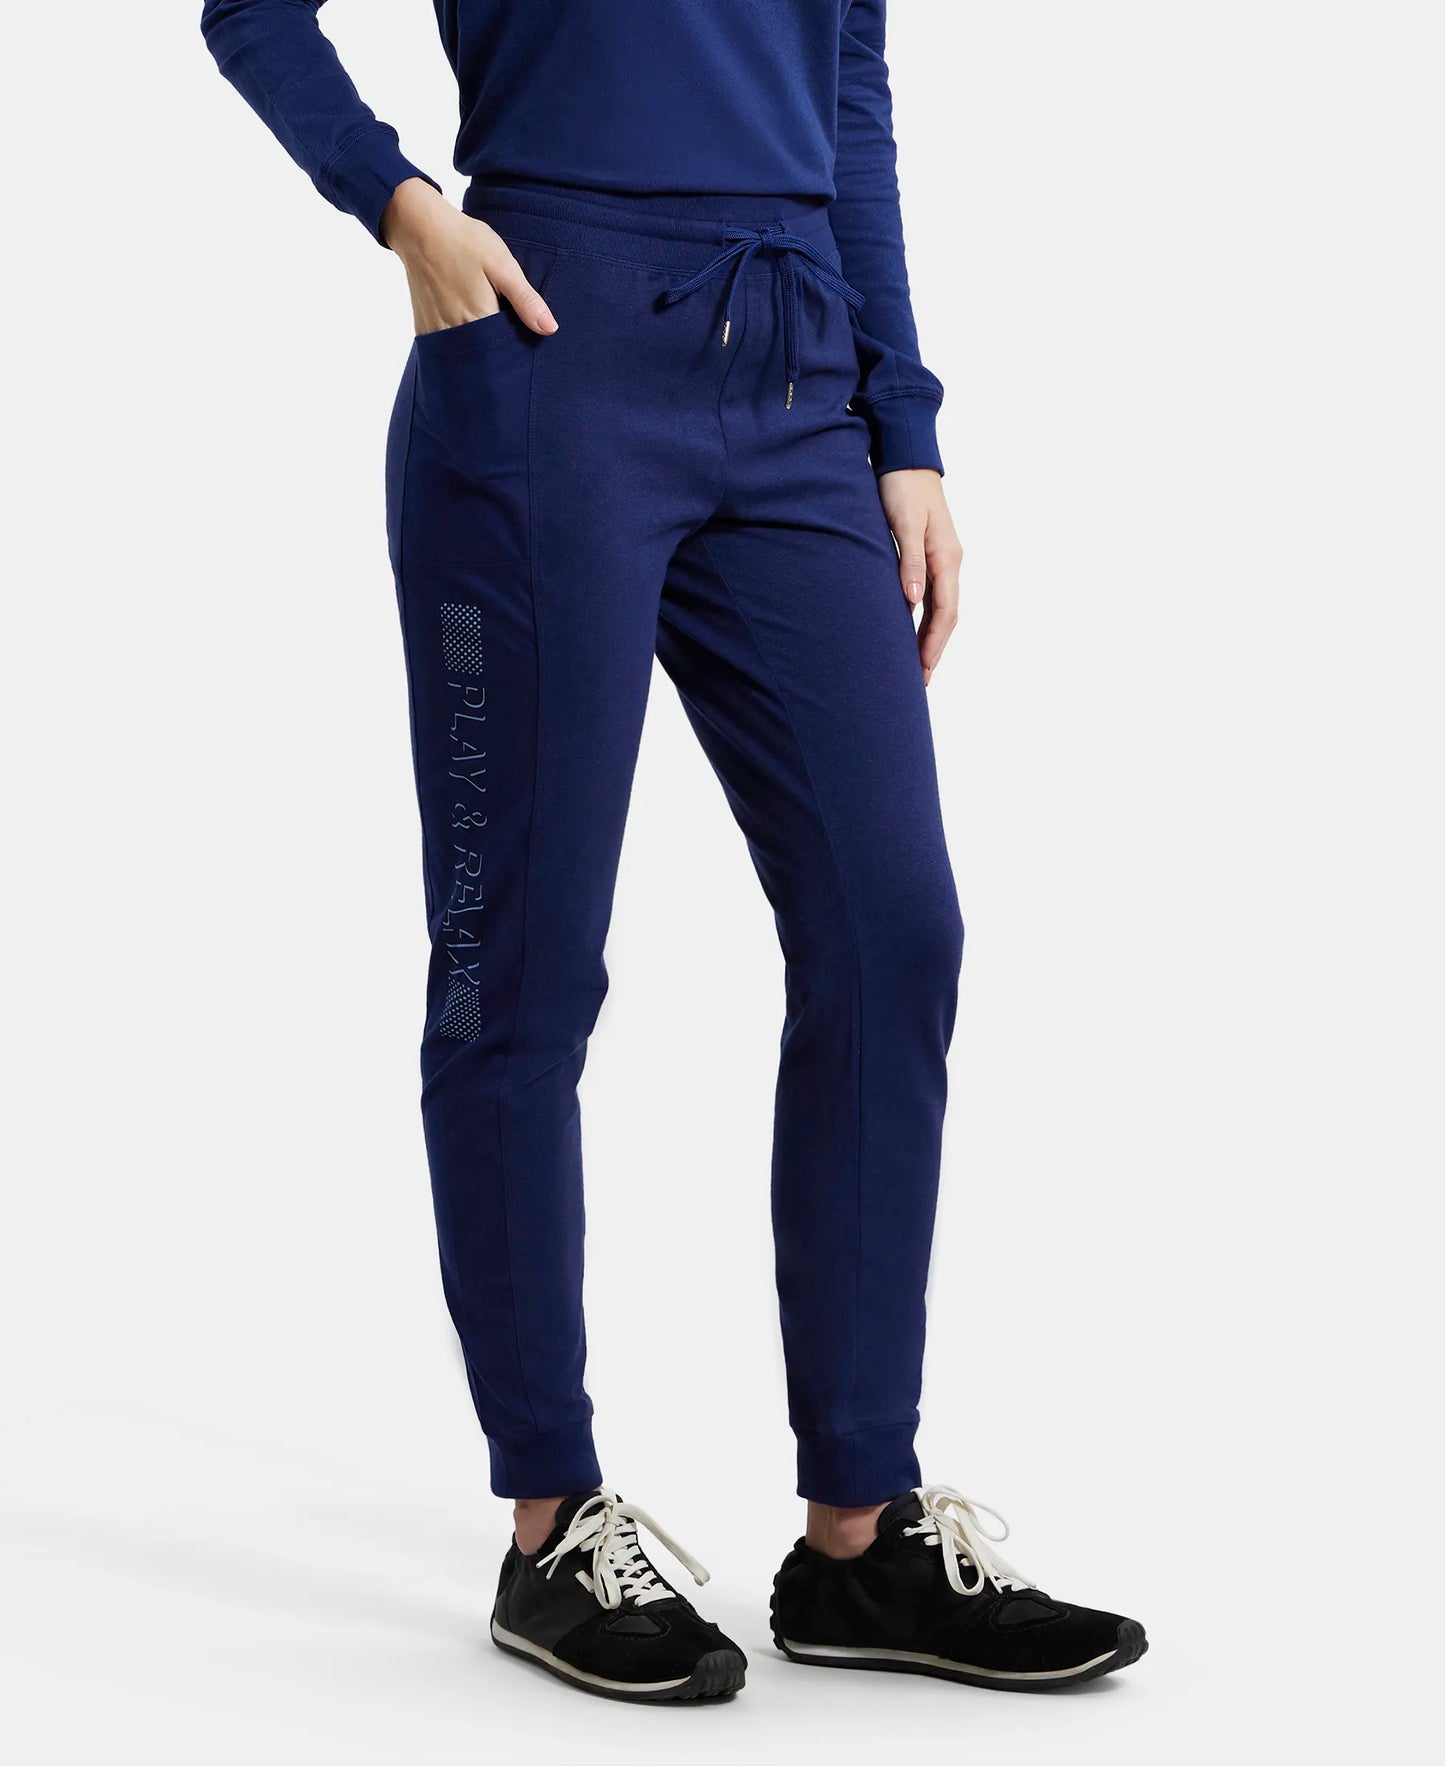 Super Combed Cotton Elastane Slim Fit Joggers With Side Pockets - Imperial Blue Melange-2